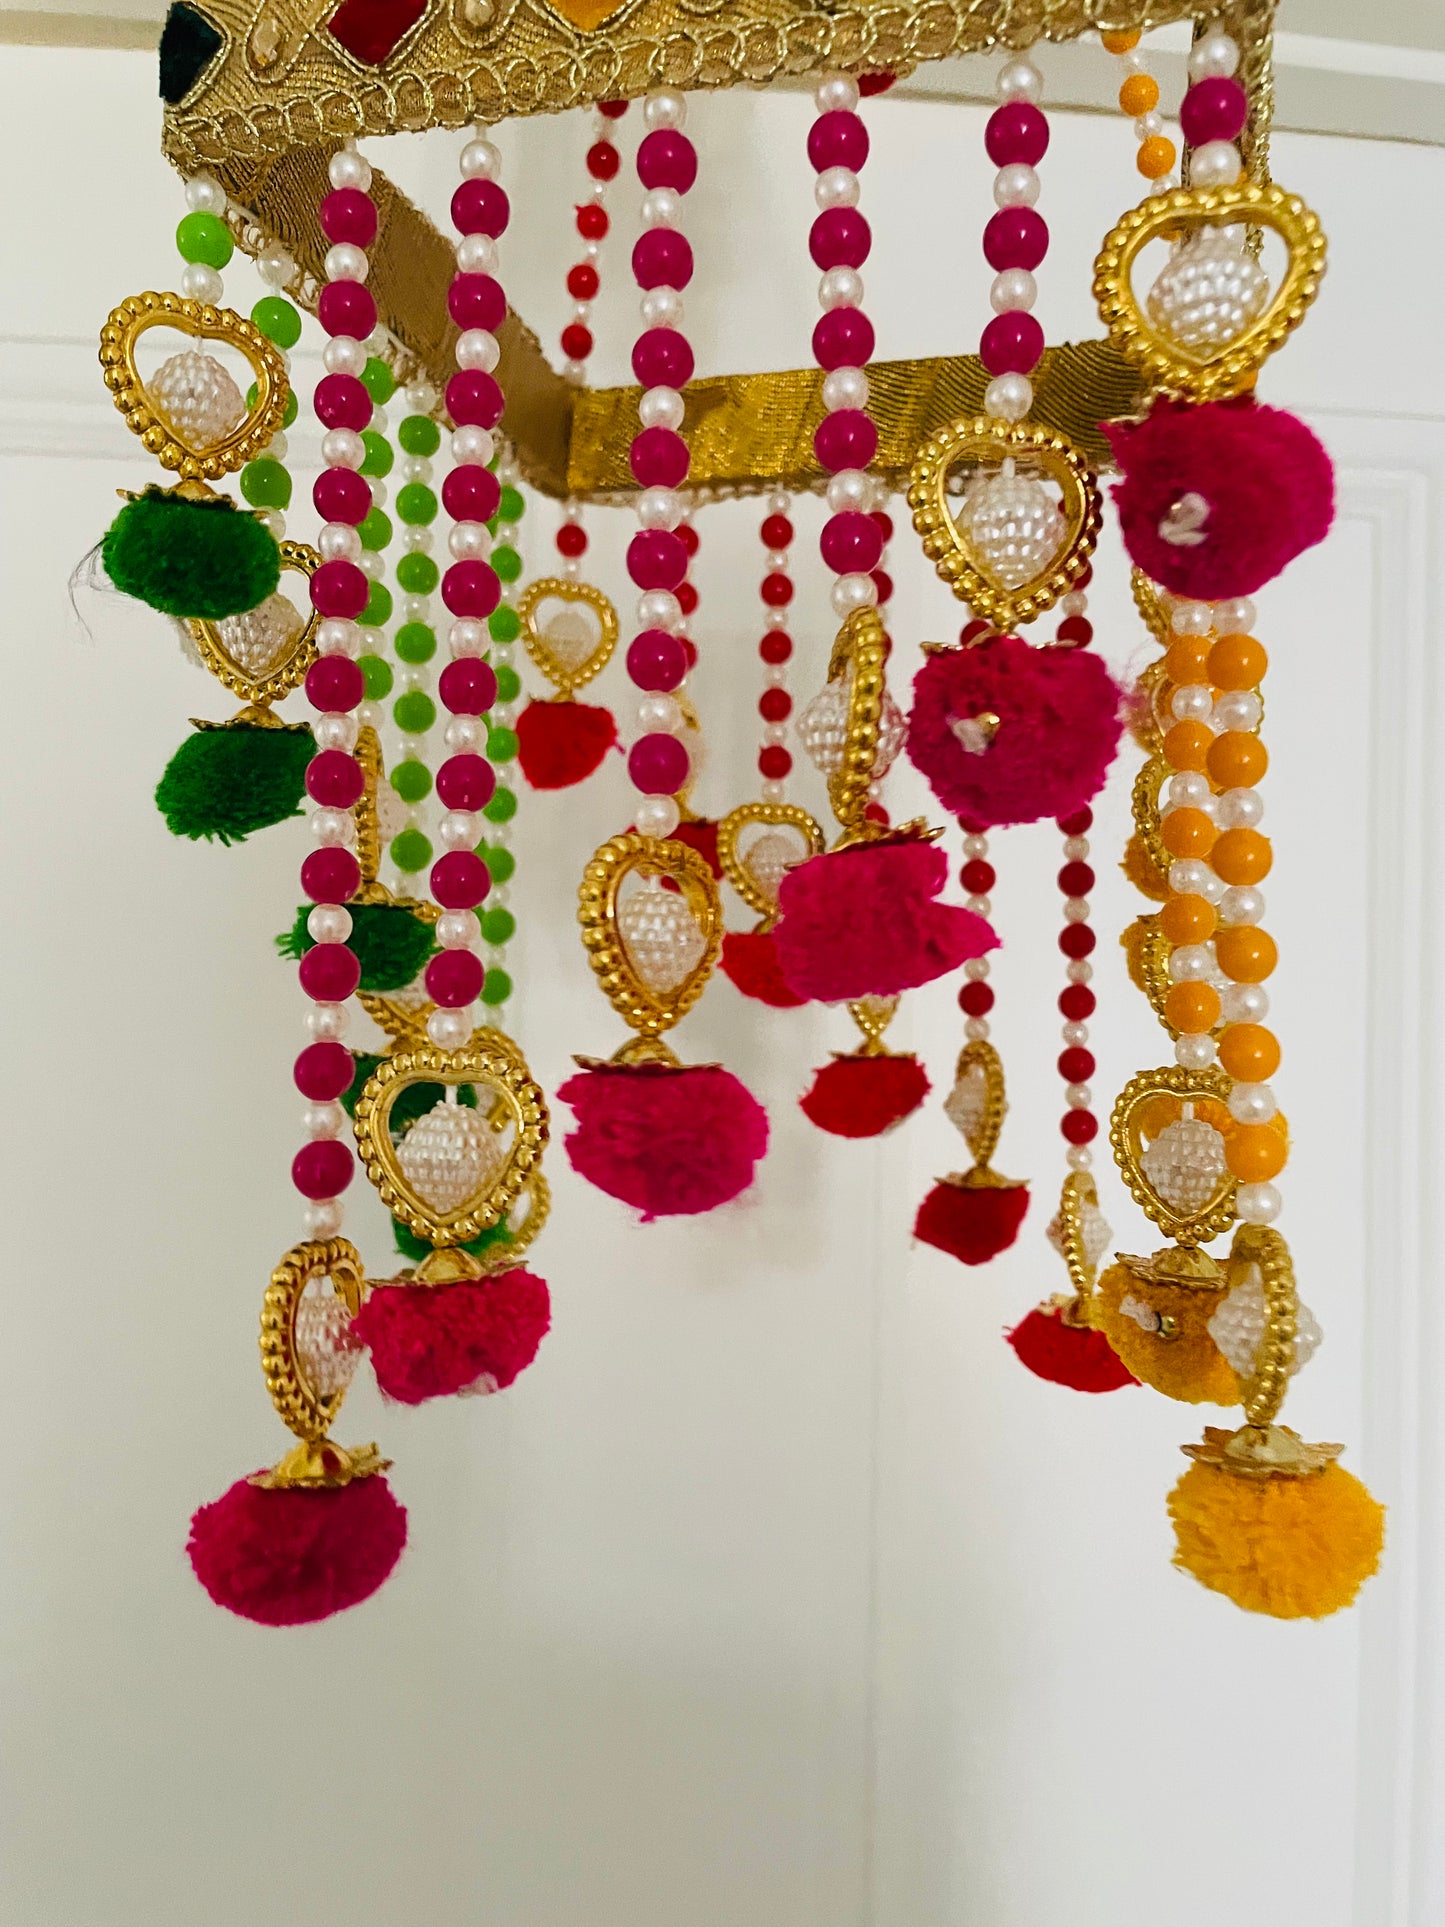 Pom Pom Colourful Jhoomar Home Decorations Jhoomar Door Hanging Pearls Beads Jhumka Style Latkan Diwalidecor Homedecor